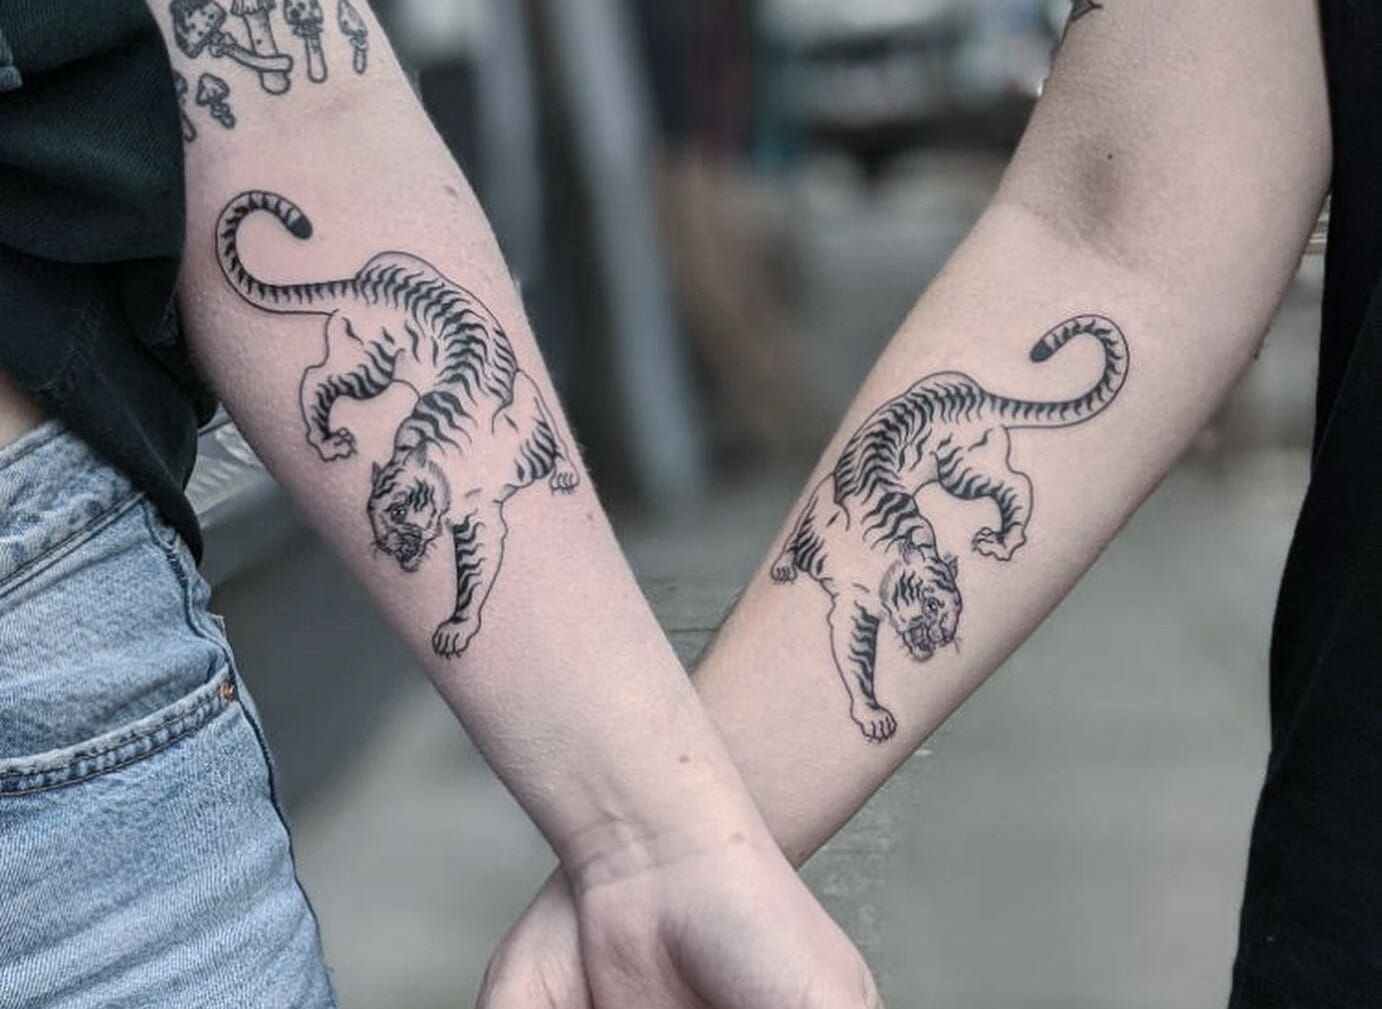 Tattoo uploaded by Meeh Inkblesstattoo • Buddha Thai style at inkbless  tattoo studio #pattayaink #thaiLAnd • Tattoodo